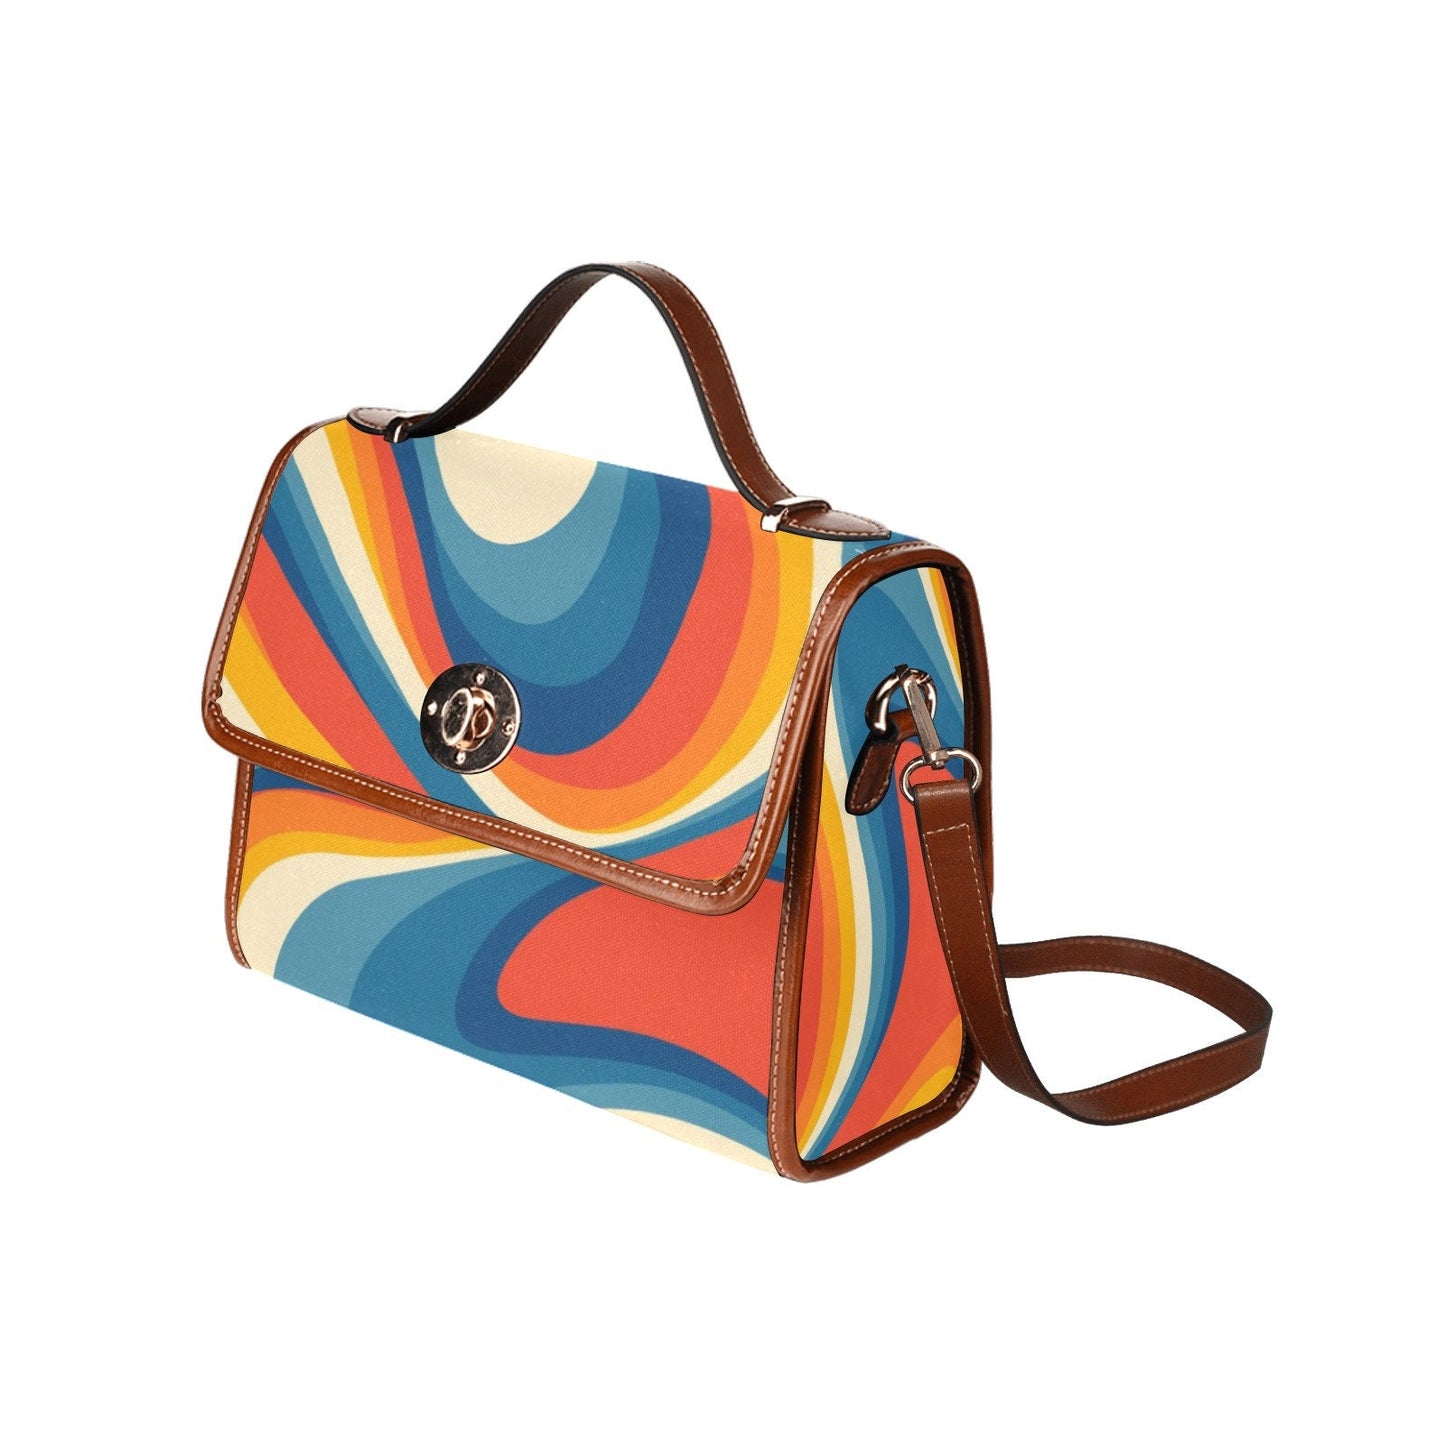 Vintage style handbag, Retro Handbag, Women's Purse, Hippie bag, 70s Style purse, Blue Stripe Handbag,70s handbag, 70s inspired, Women's Bag